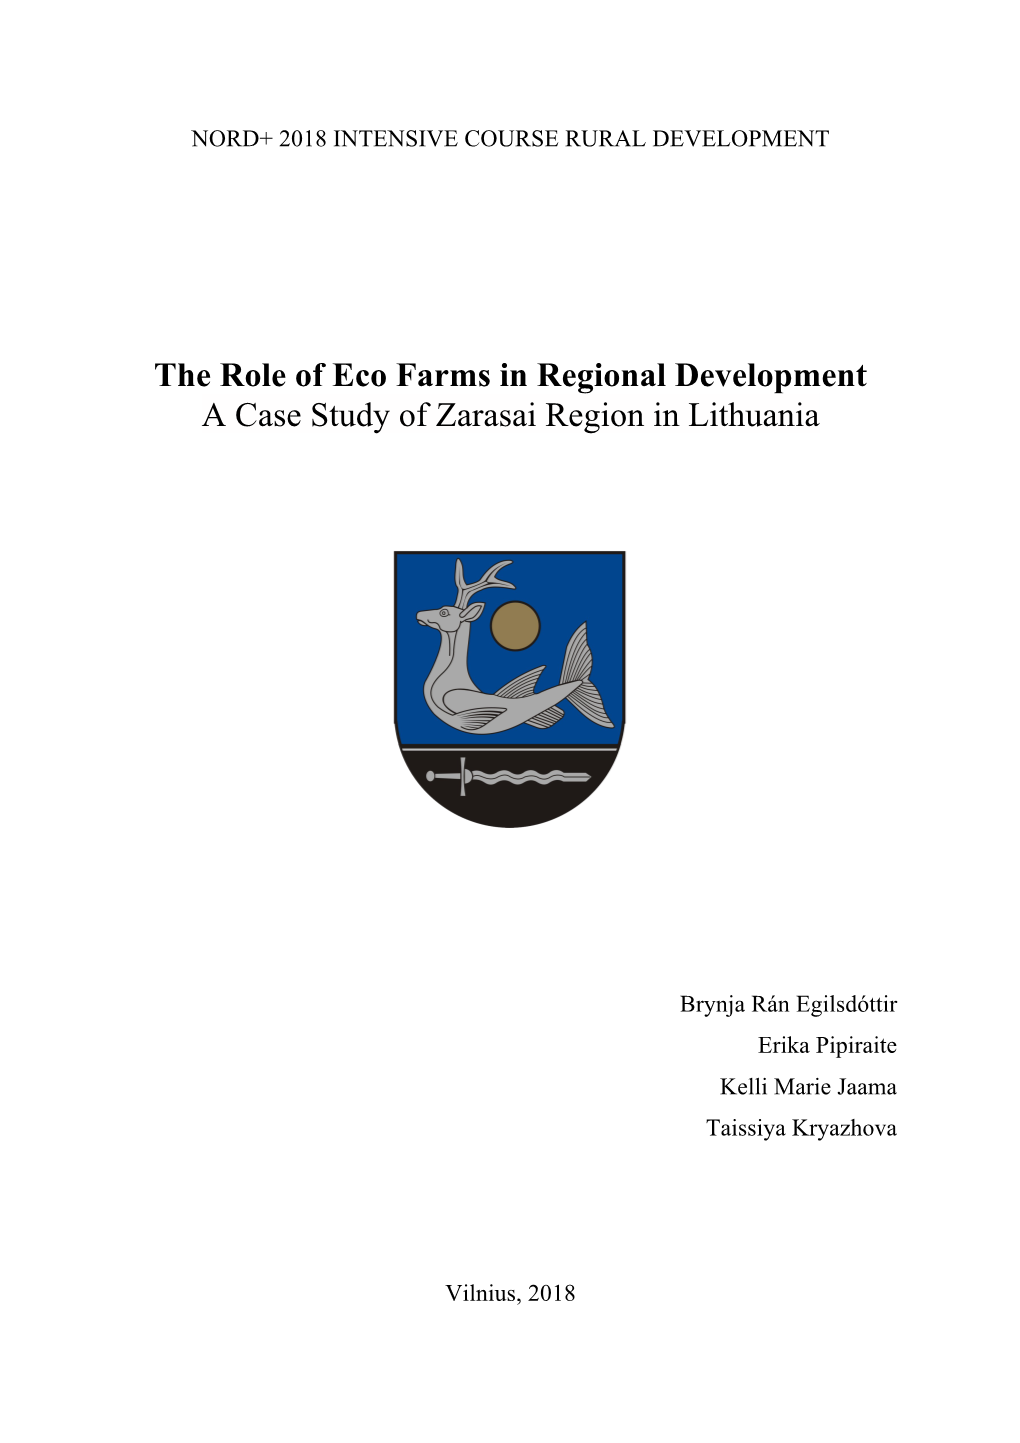 The Role of Eco Farms in Regional Development a Case Study of Zarasai Region in Lithuania